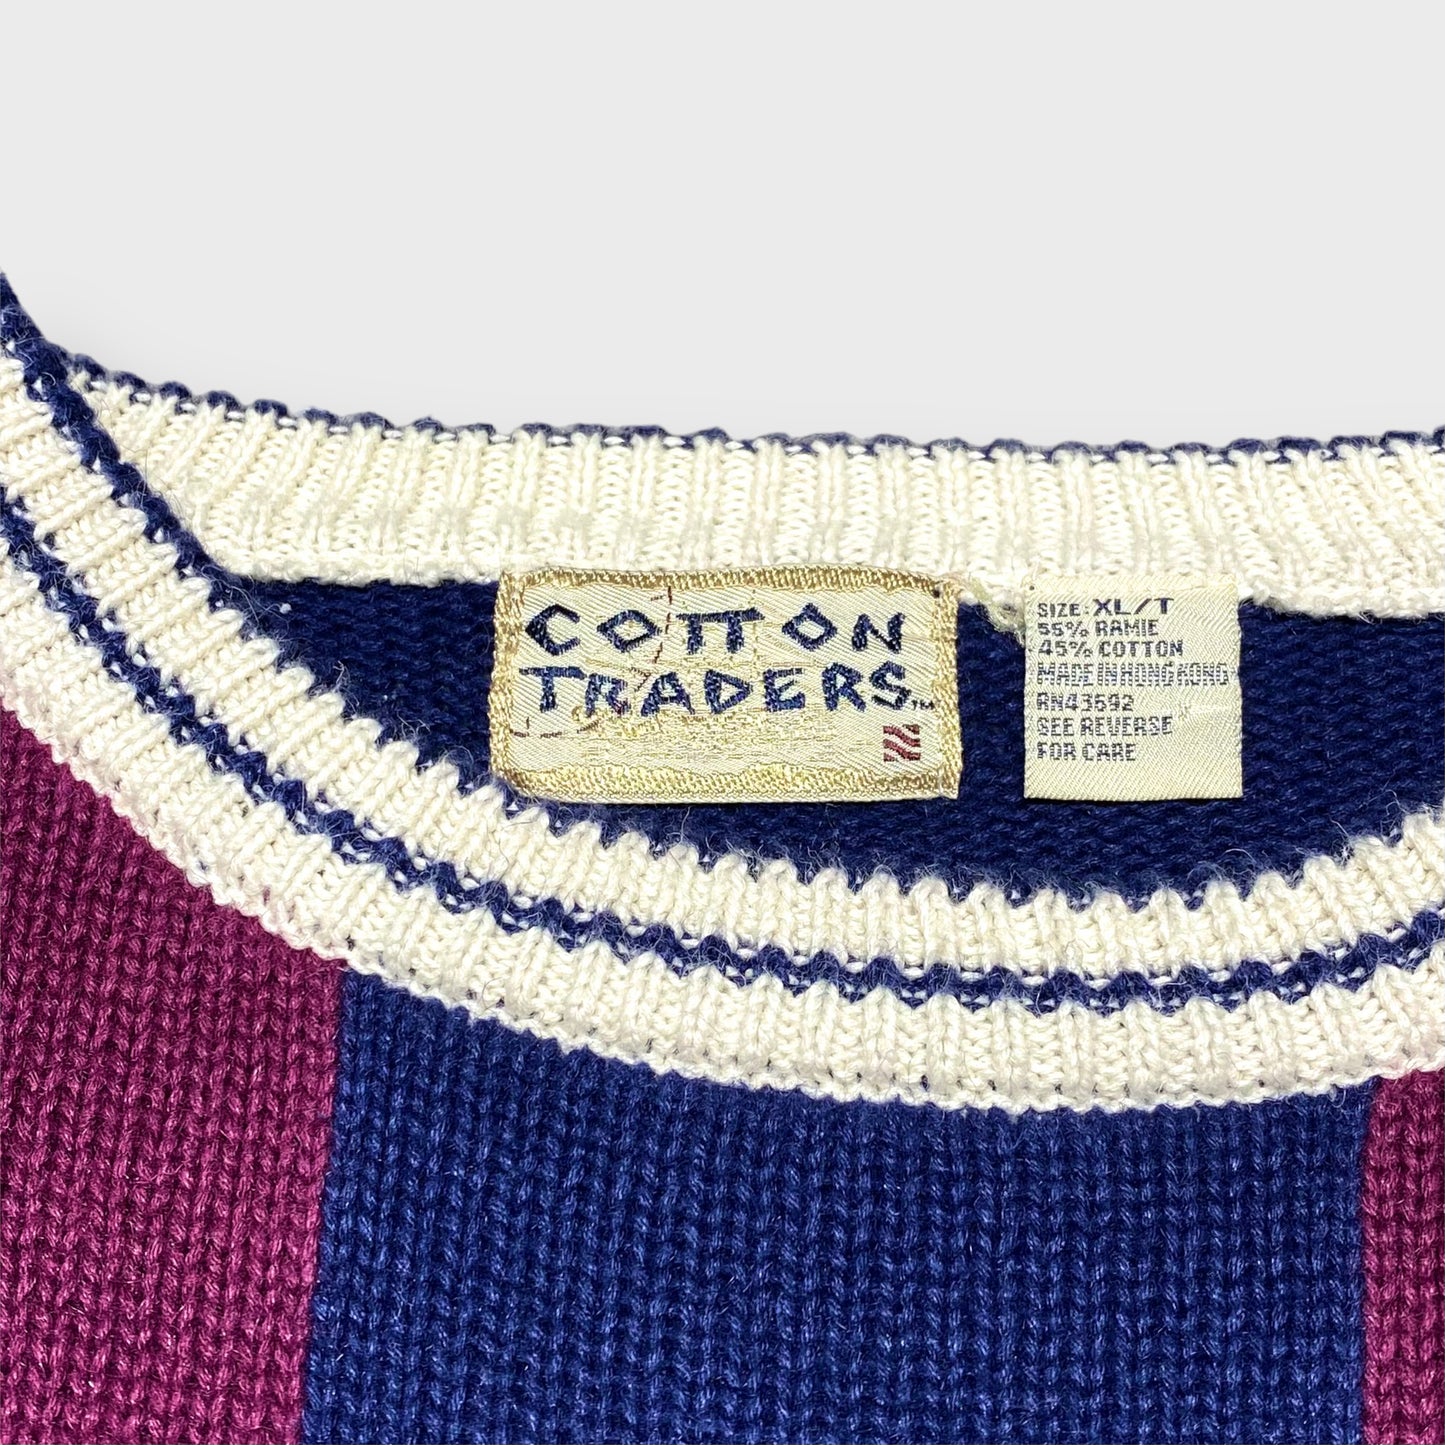 Stripe × argyle pattern golf knit sweater